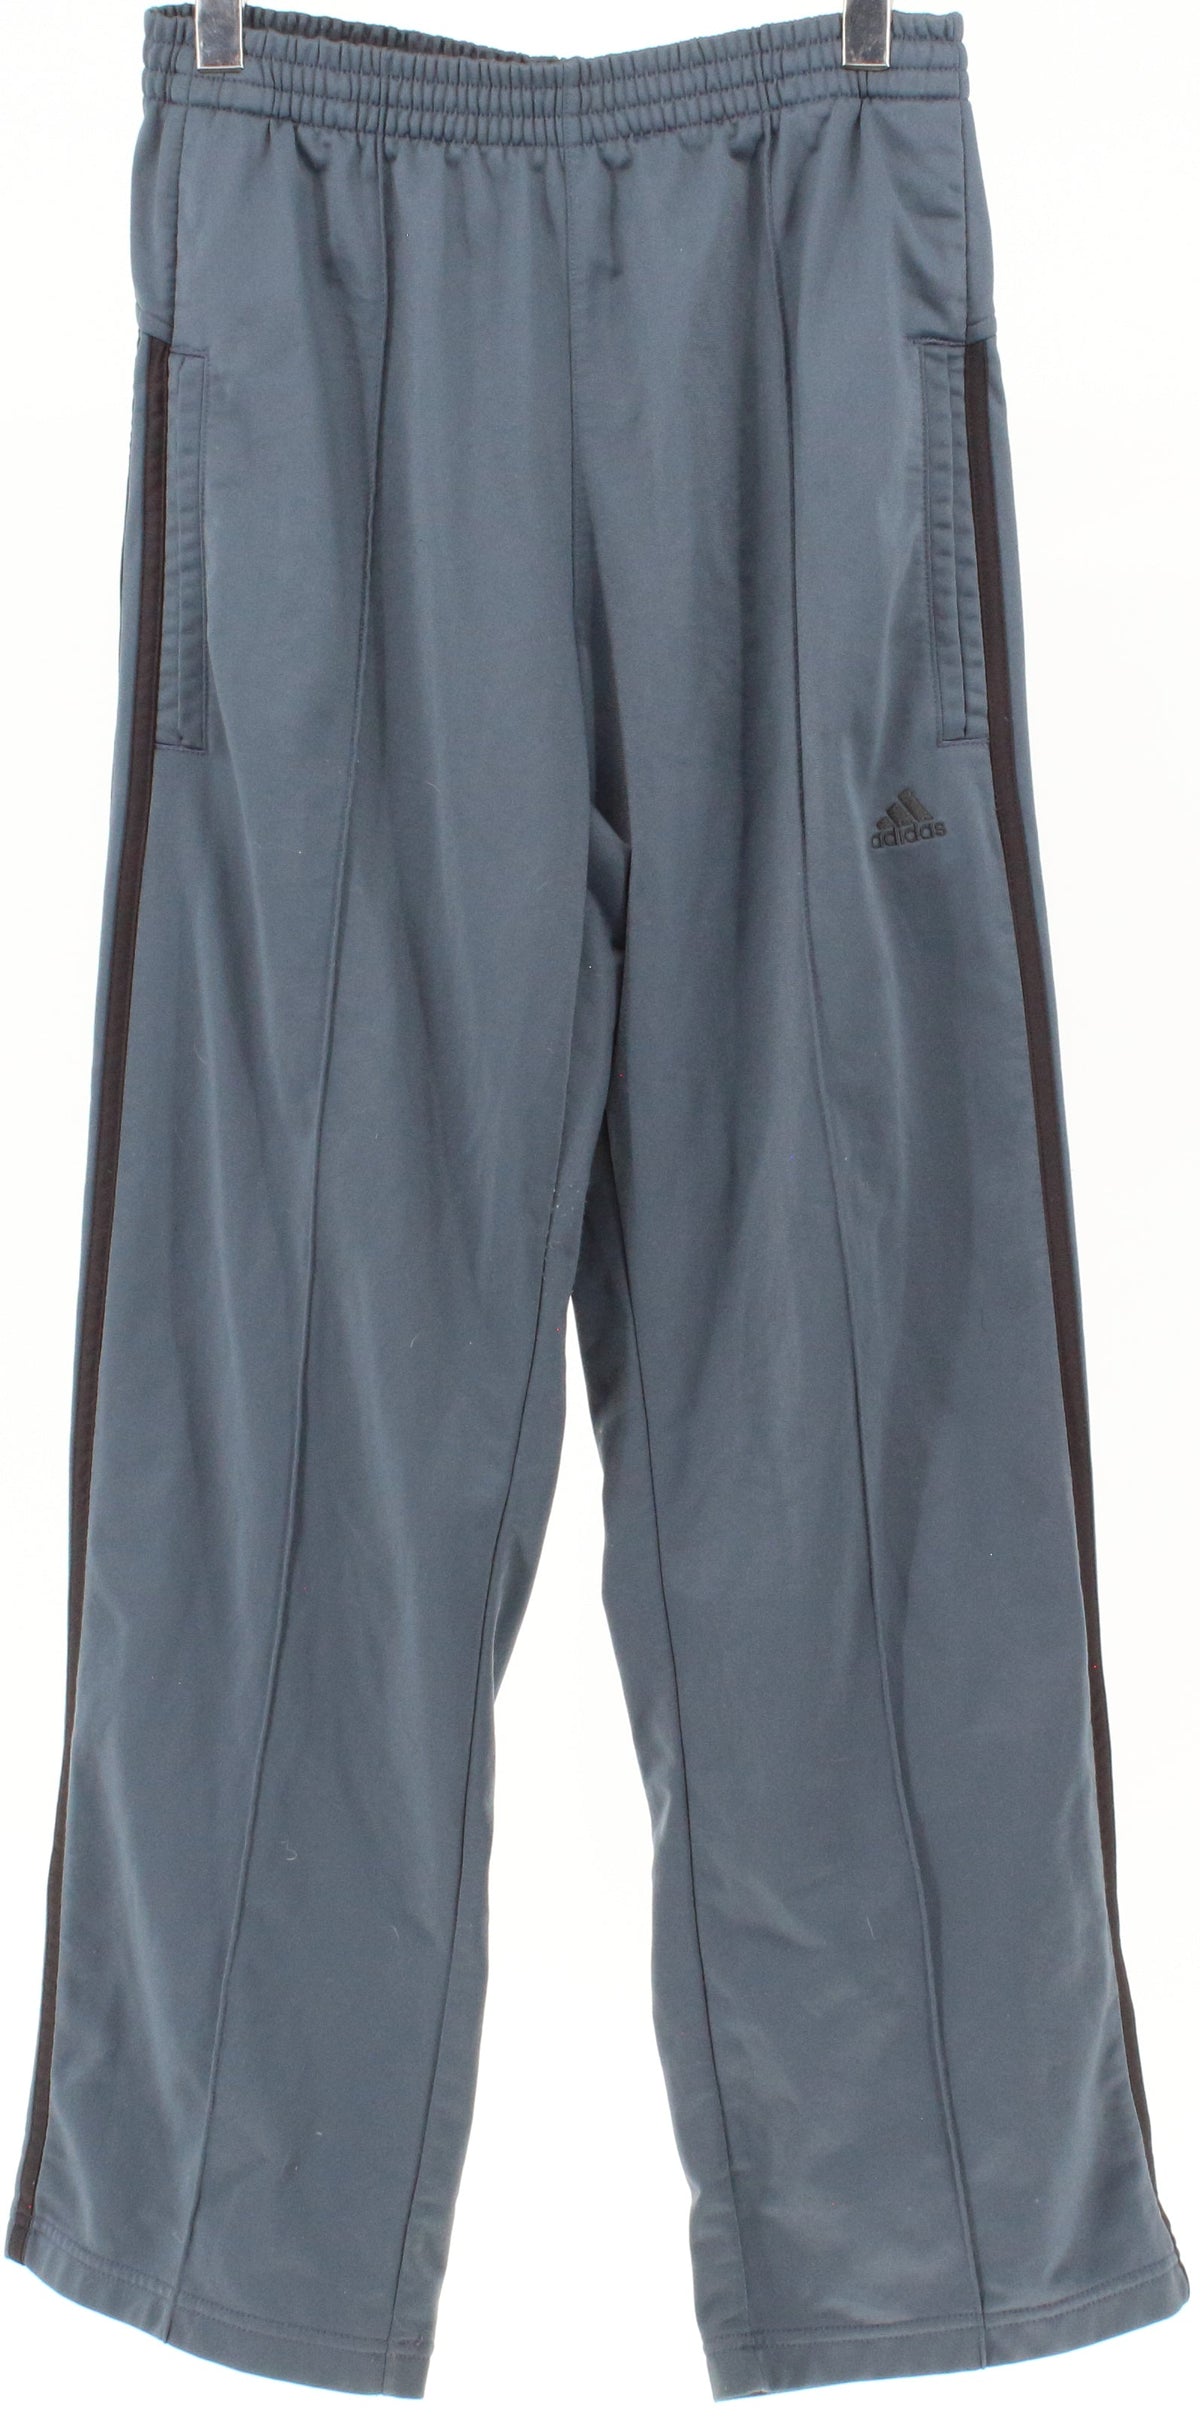 Adidas Dark Grey With Black Stripes Track Men's Pants